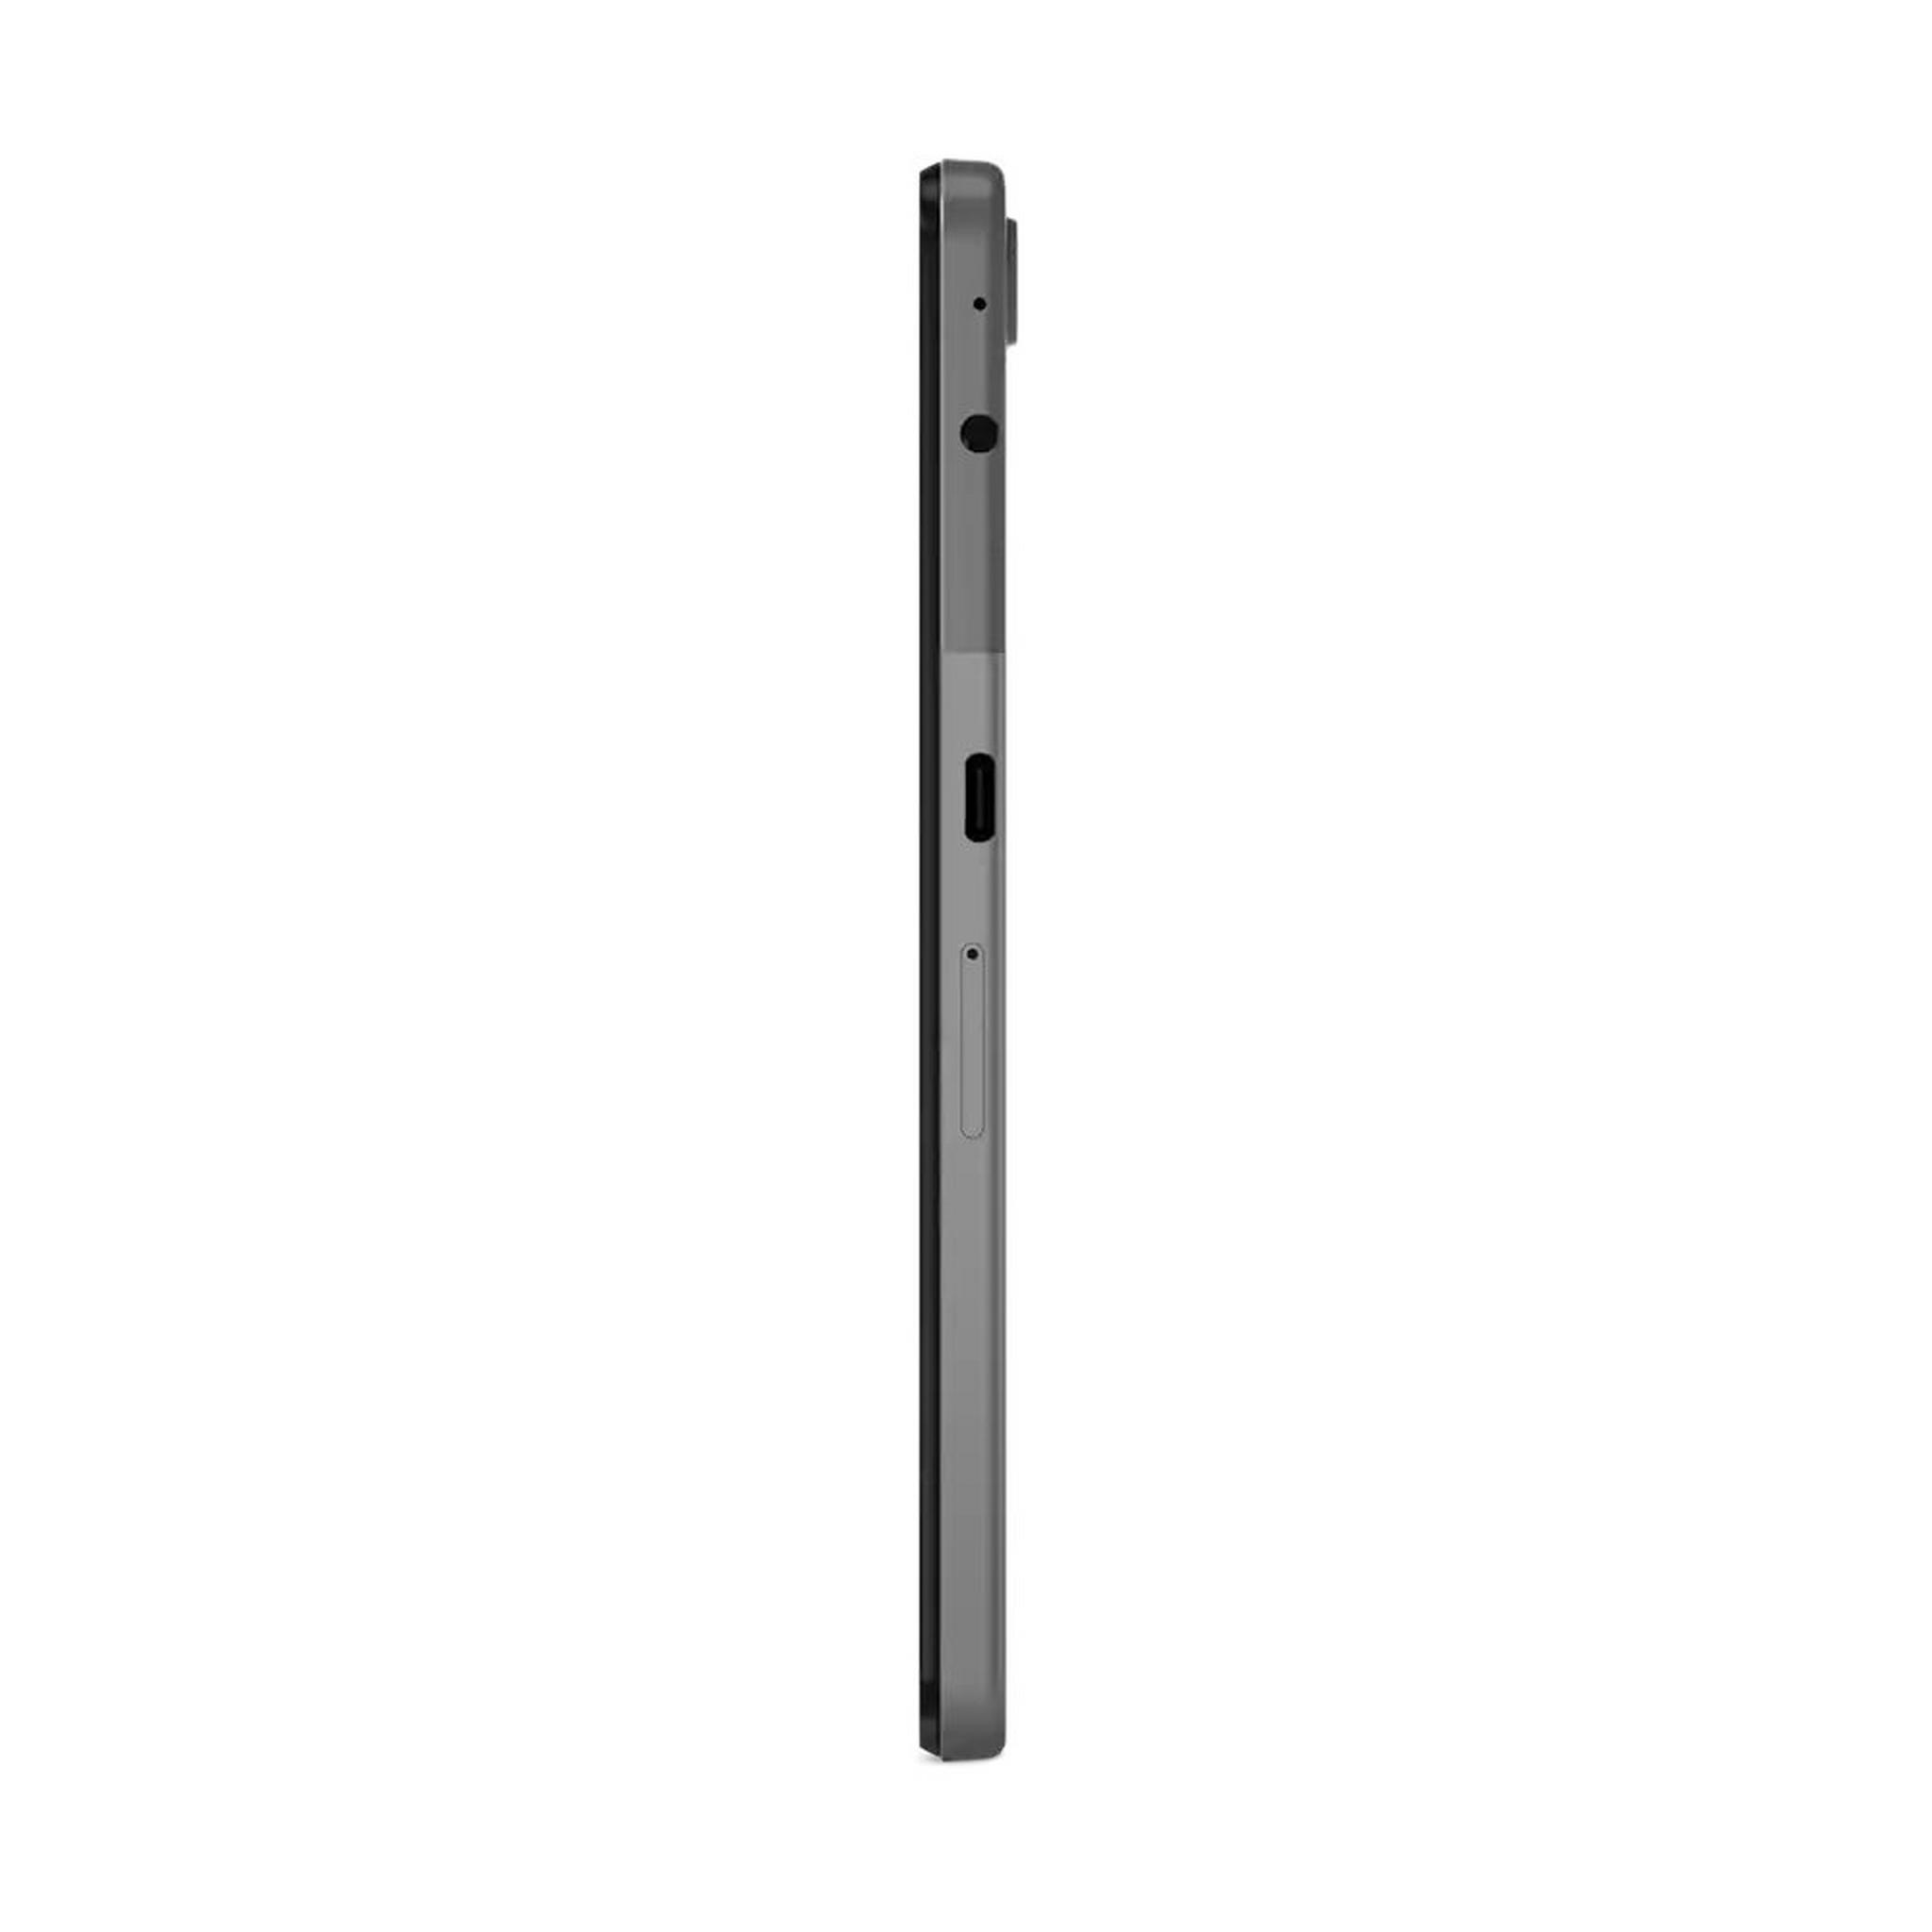 Lenovo M10 3rd Gen, 64GB 4G Tablet - Grey + Case & Screen Protector